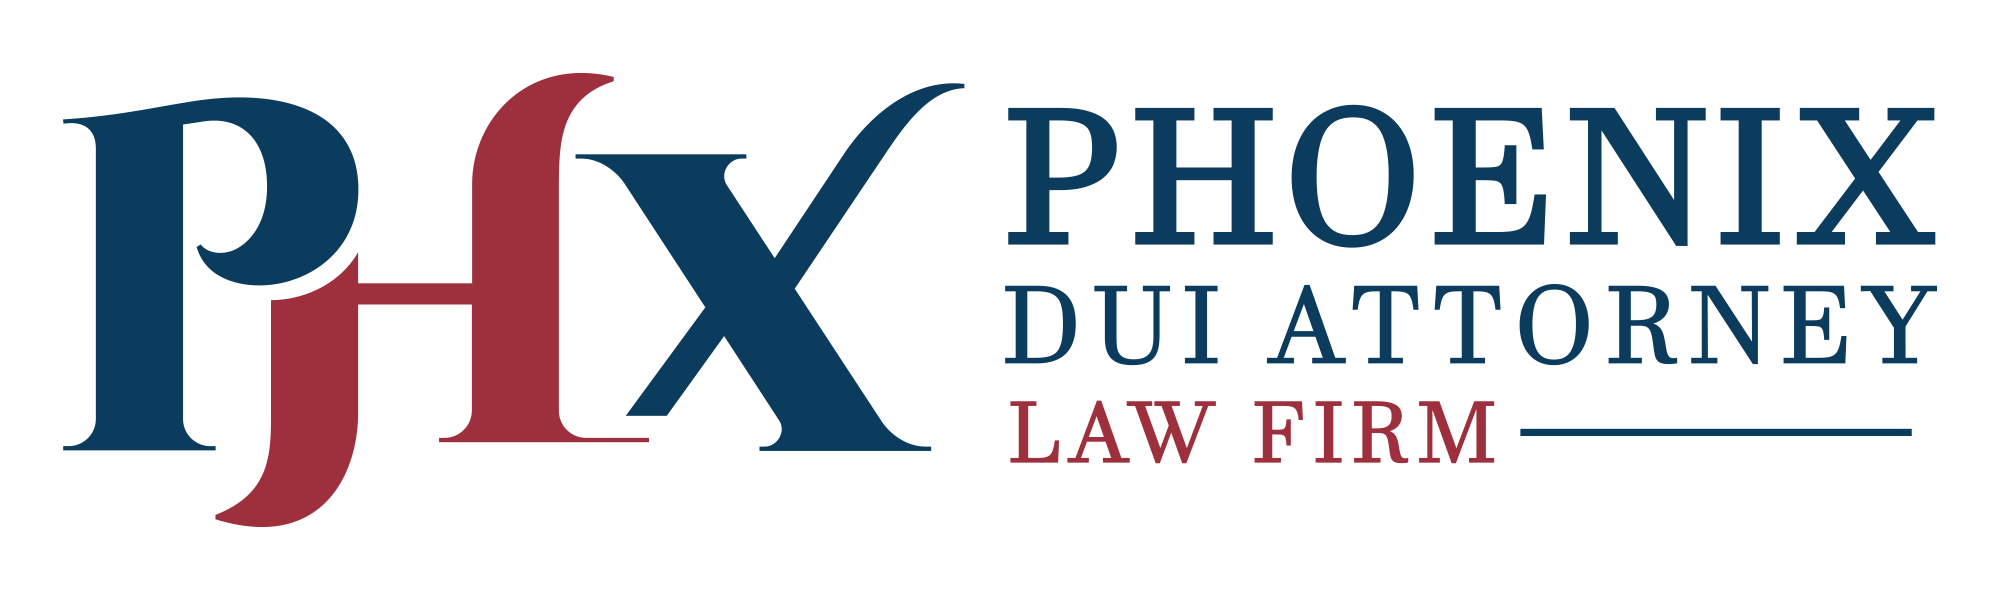 Phoenix DUI Attorney logo